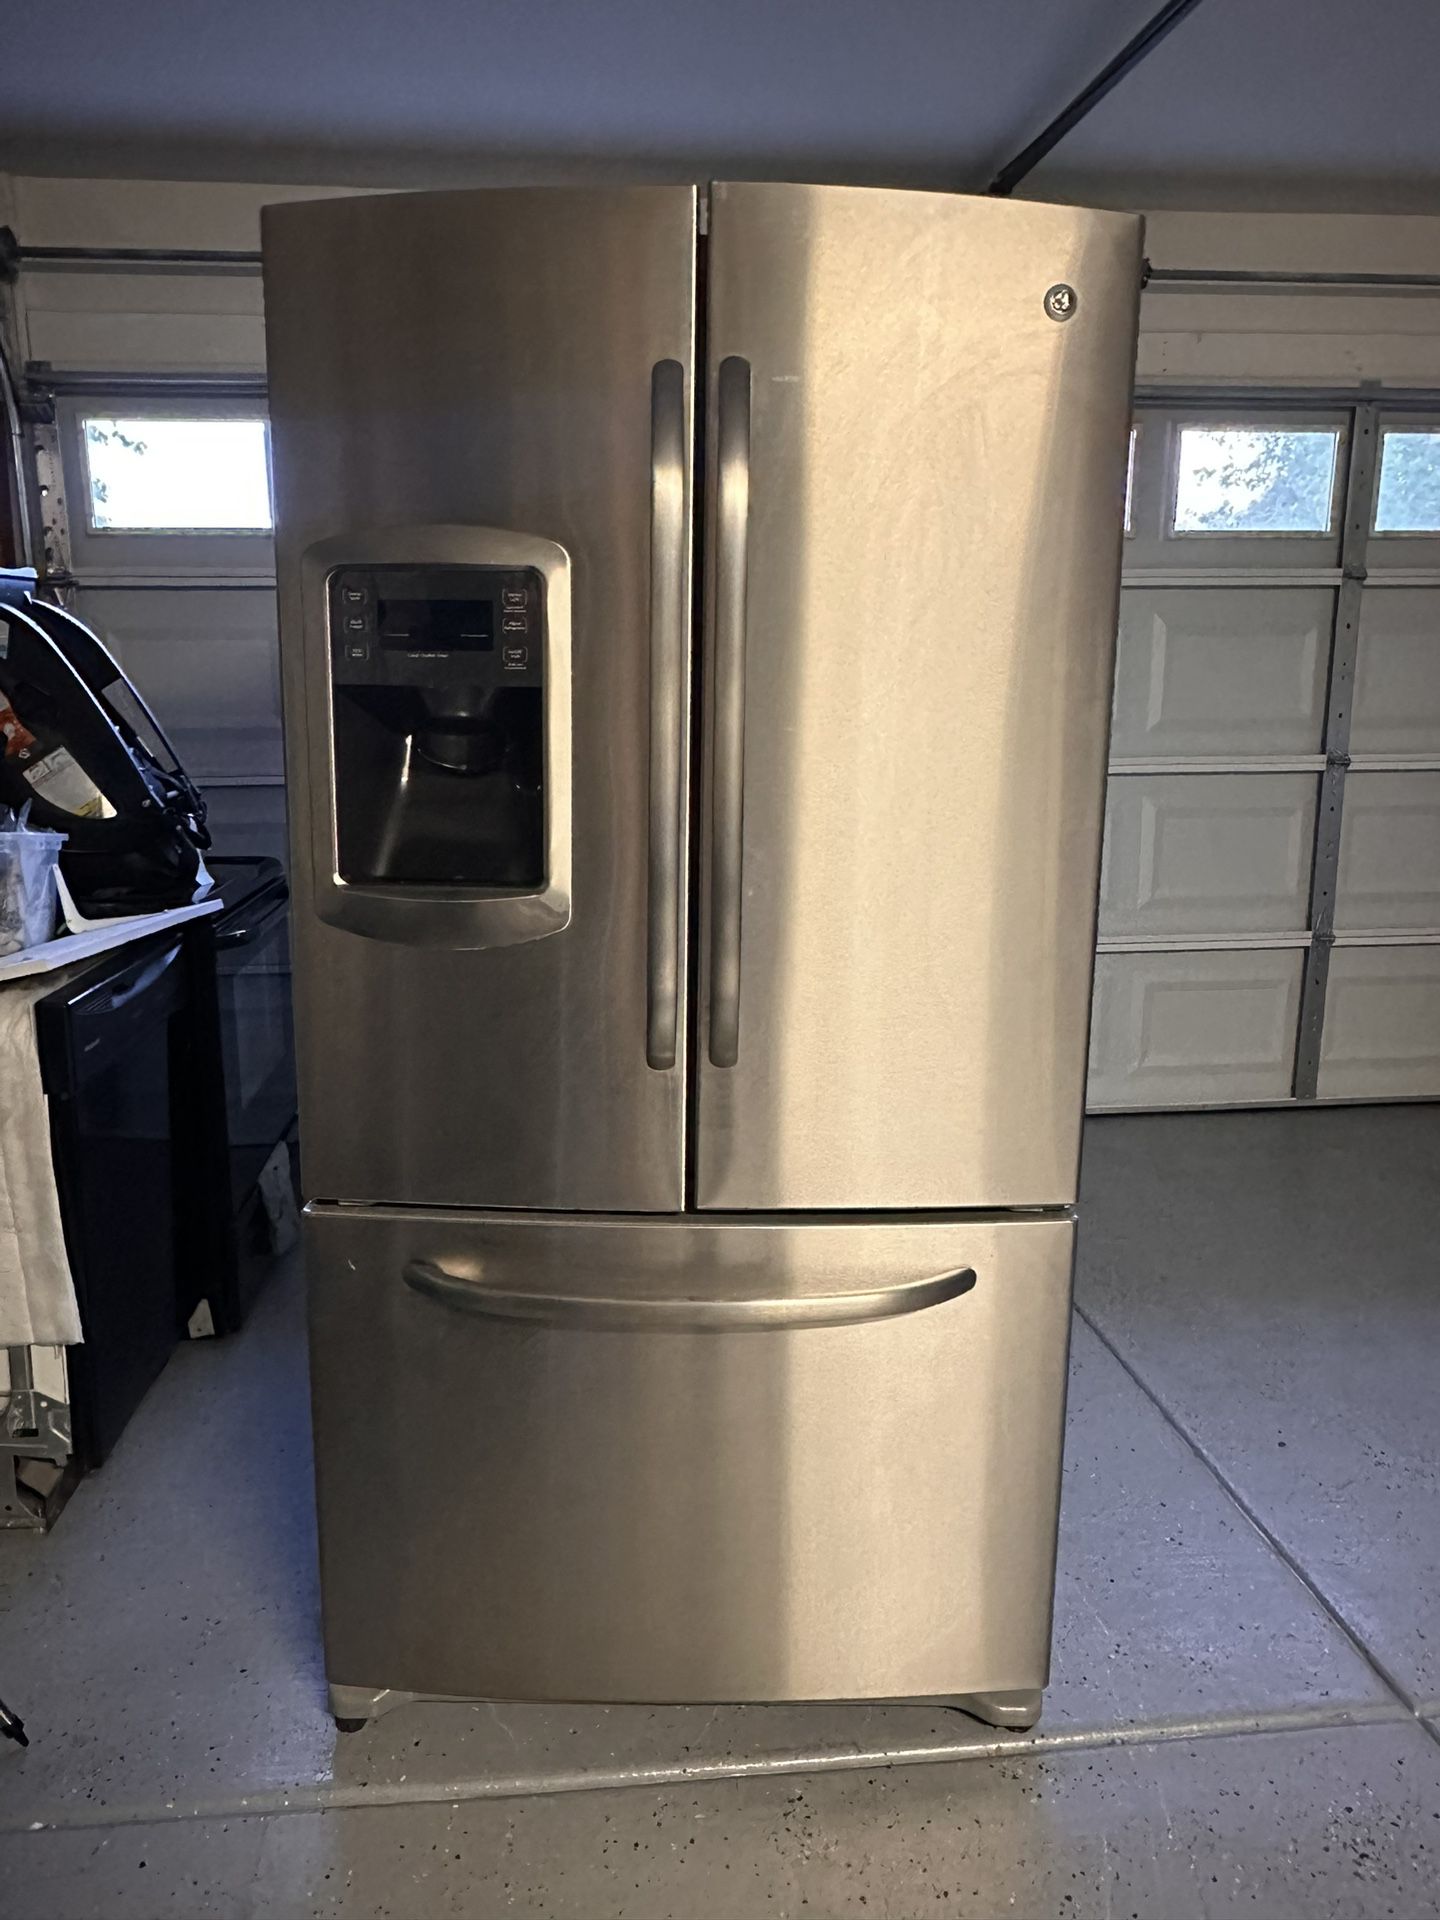 Large GE Stainless steel refrigerator